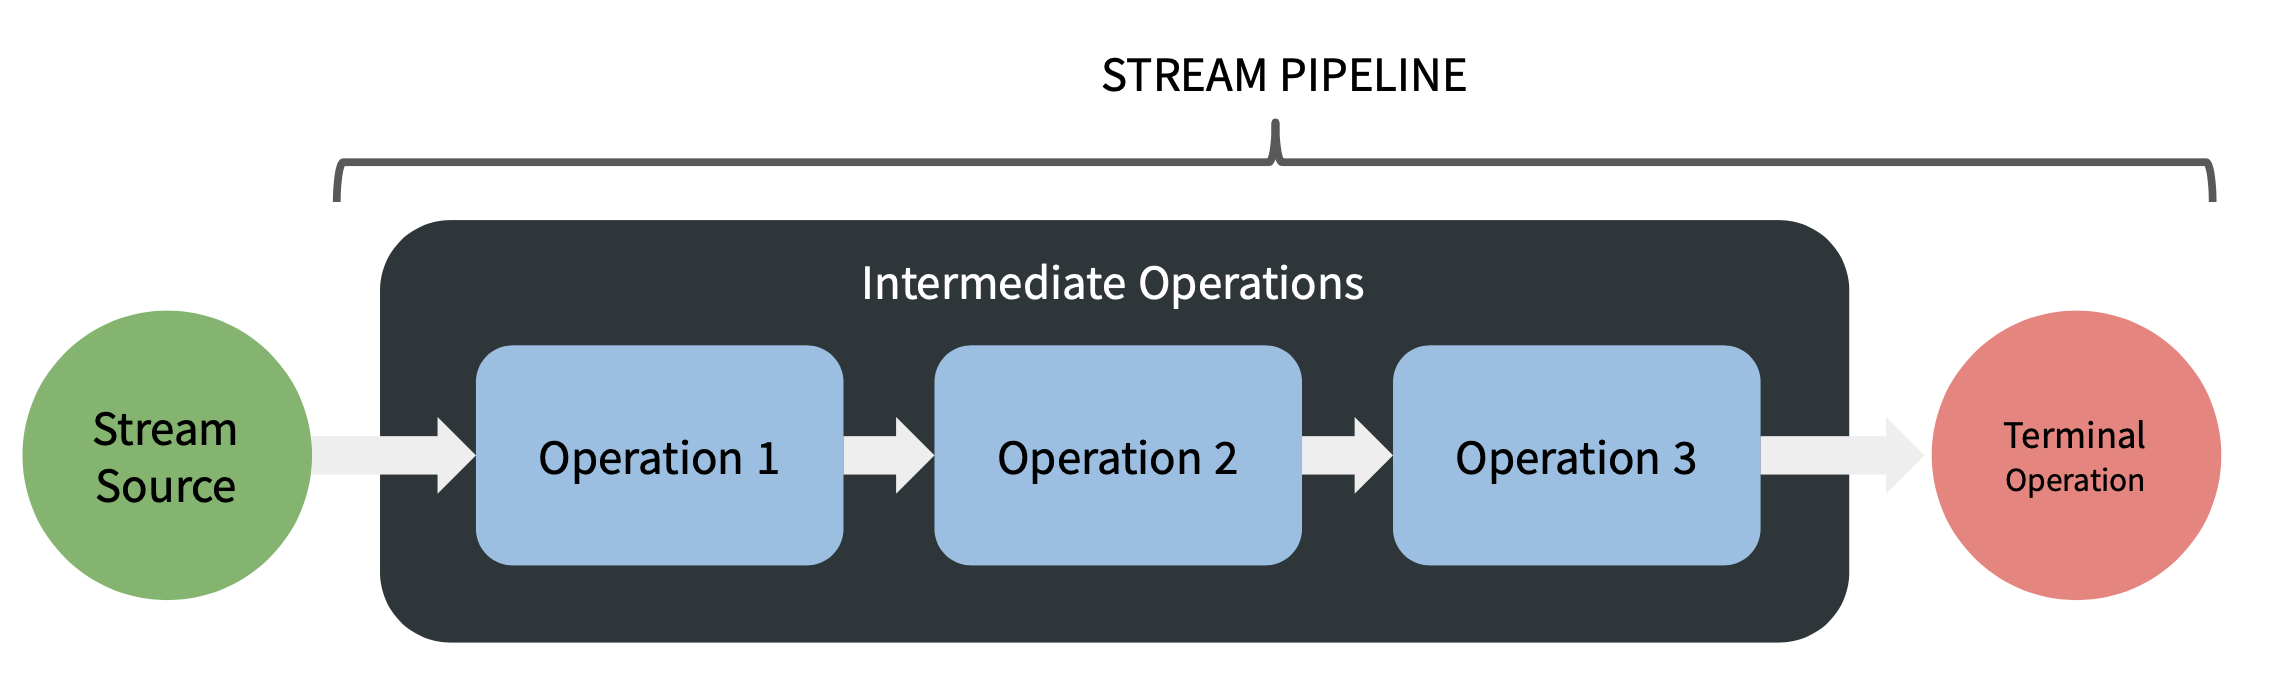 Stream Pipeline